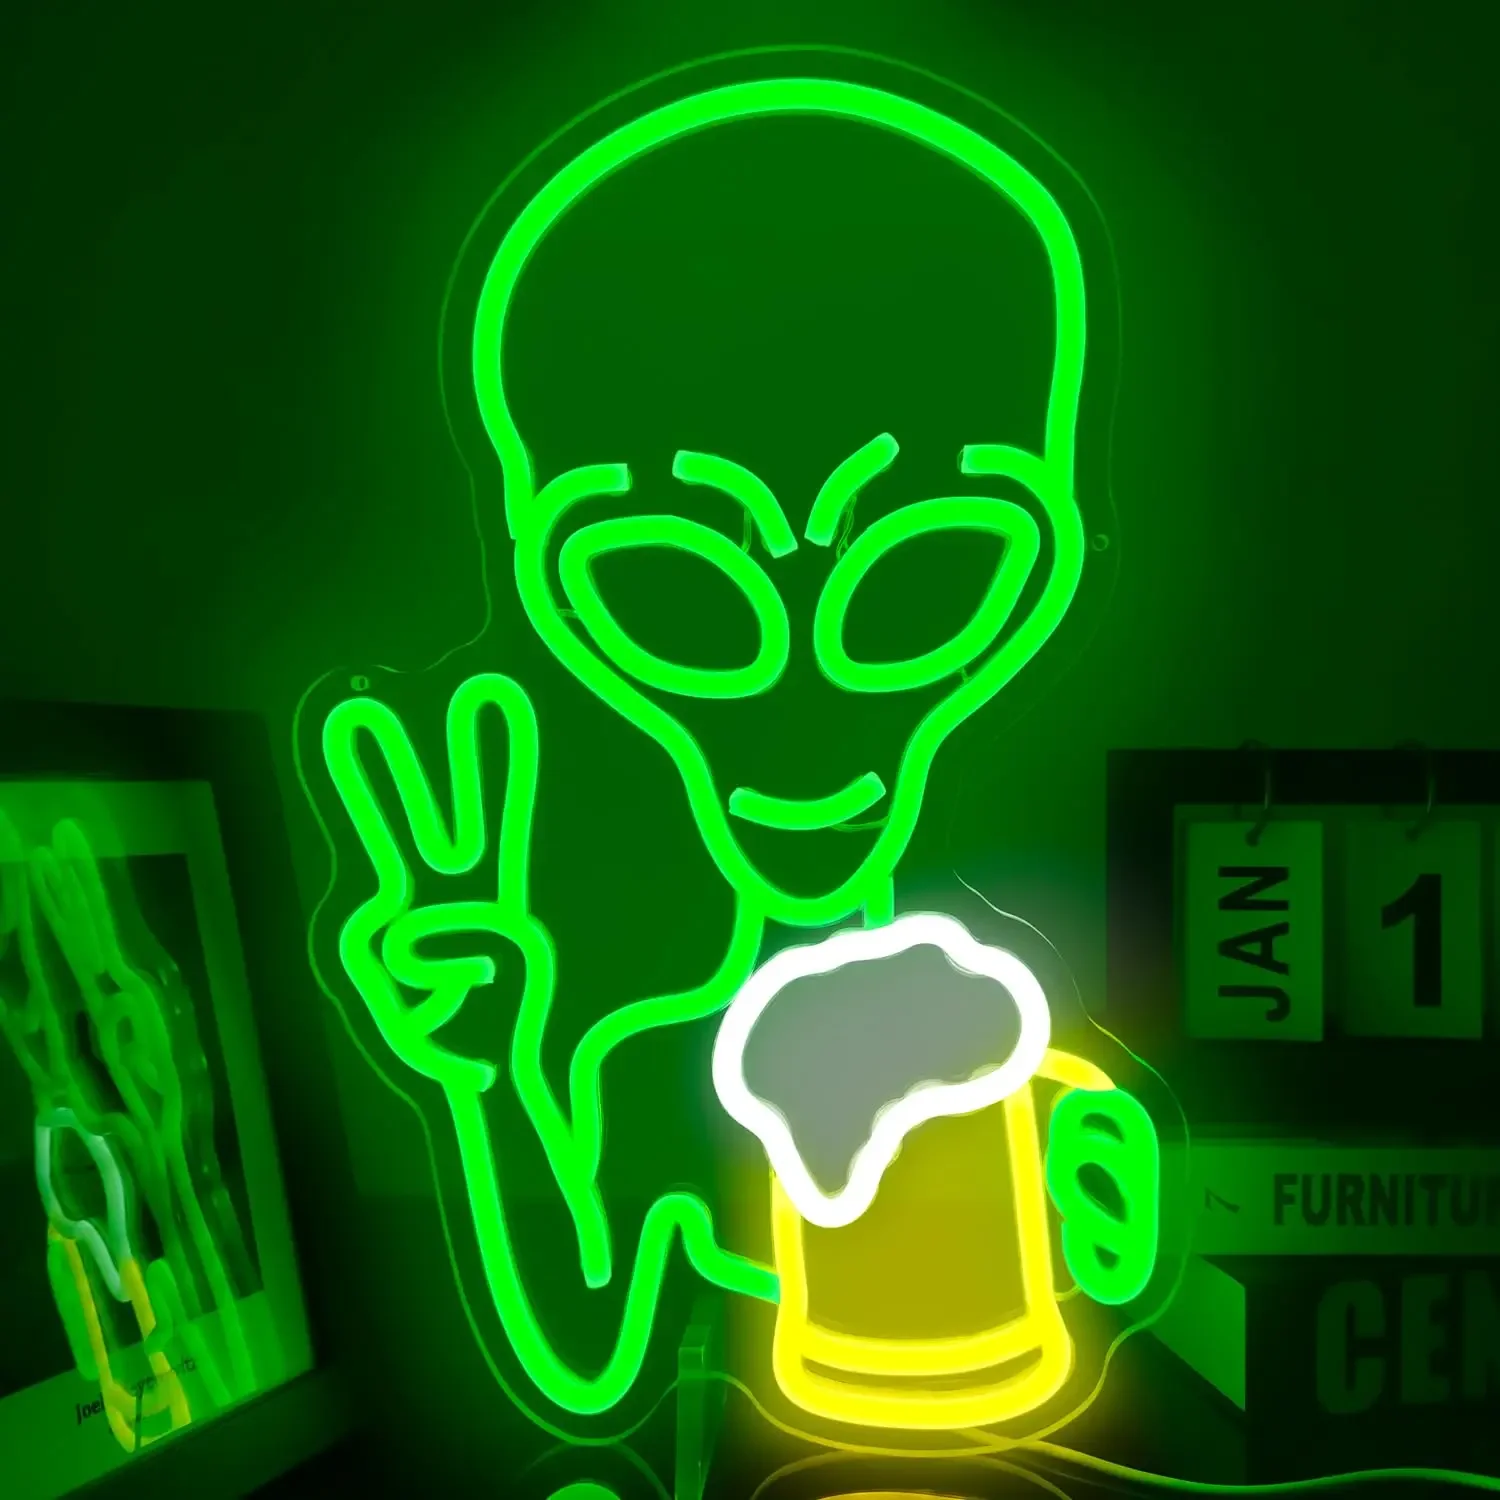 

Alien Neon Sign Green Alien Beer Neon Light Dimmable LED Light Up Signs Bedroom Game Room Bar Beer Pub Hip Hop